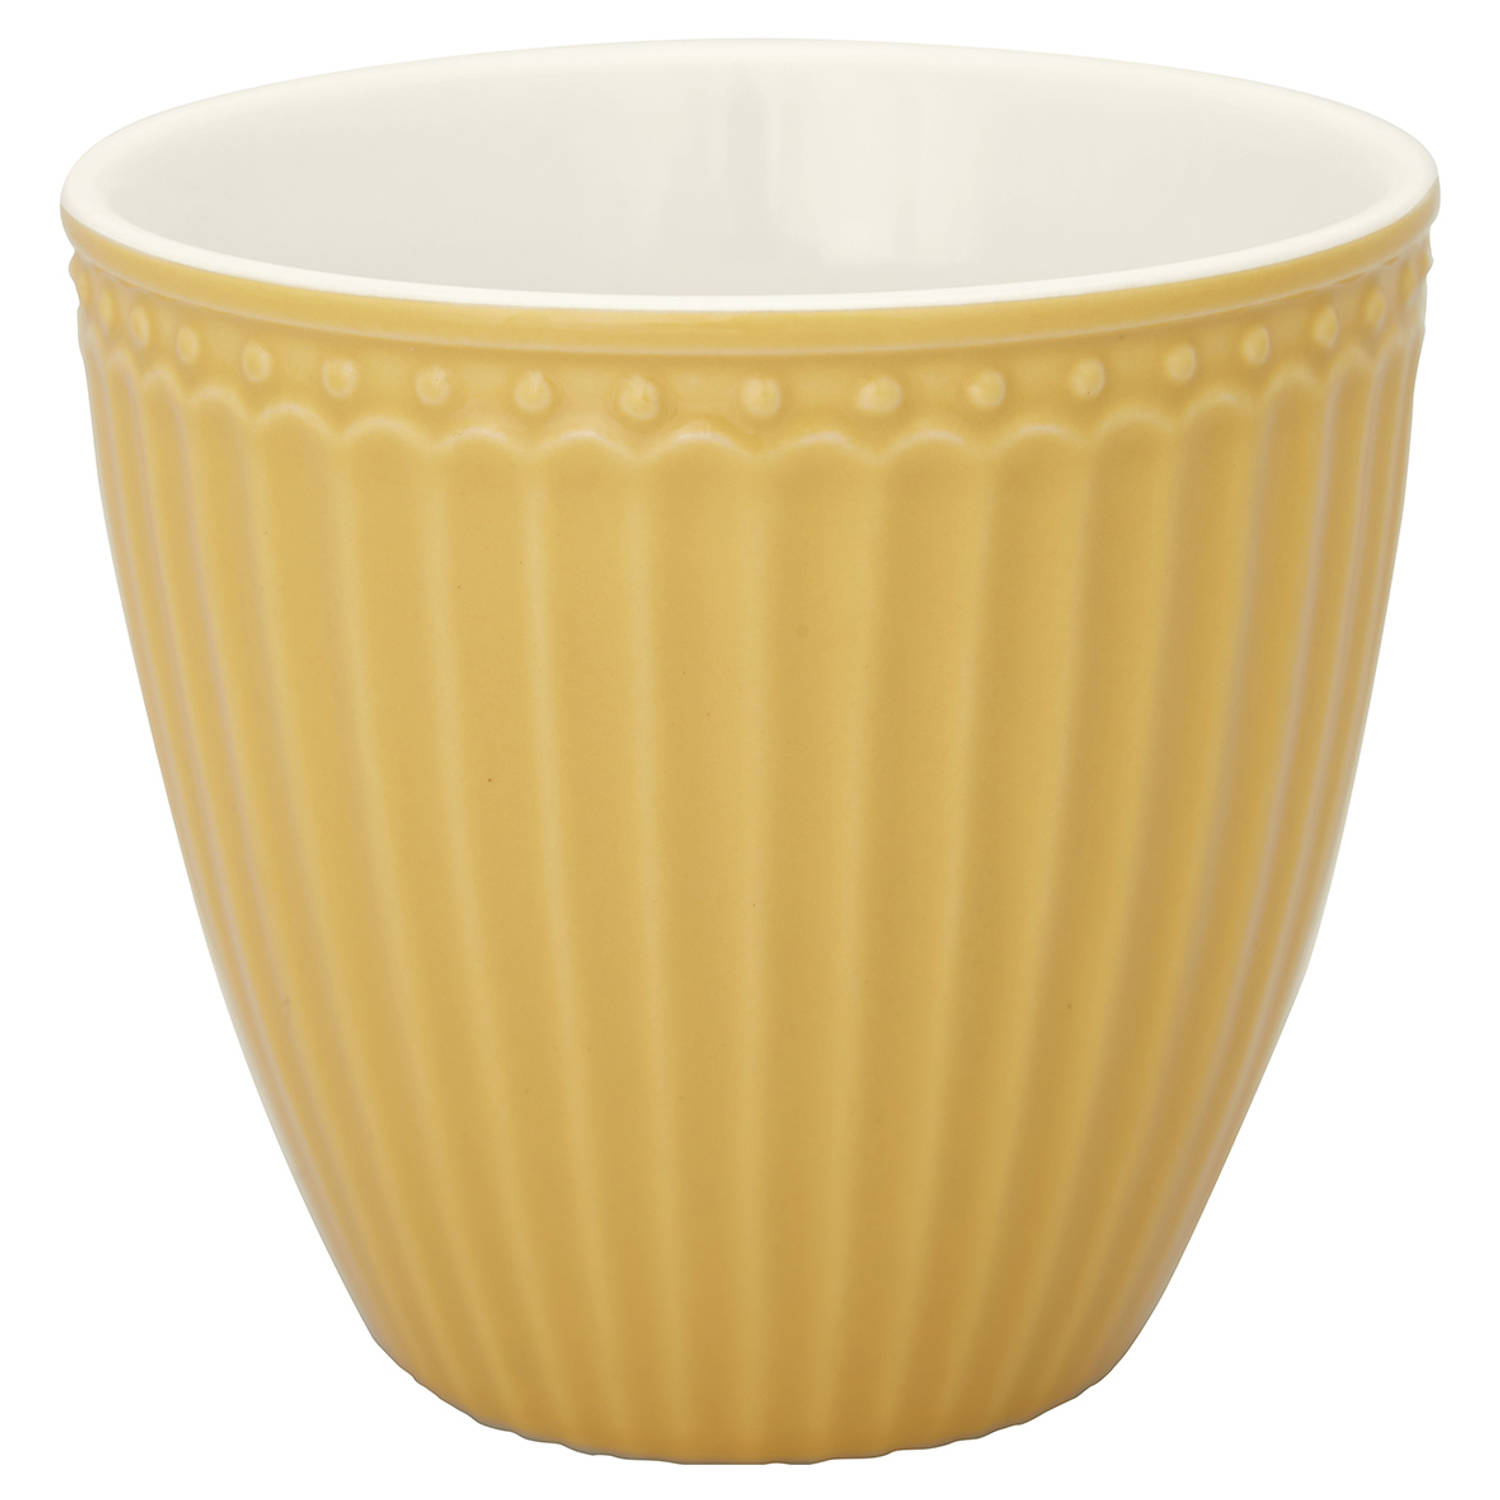 GreenGate Beker (Latte cup) Alice honey mosterd 300 ml Ø 10 cm